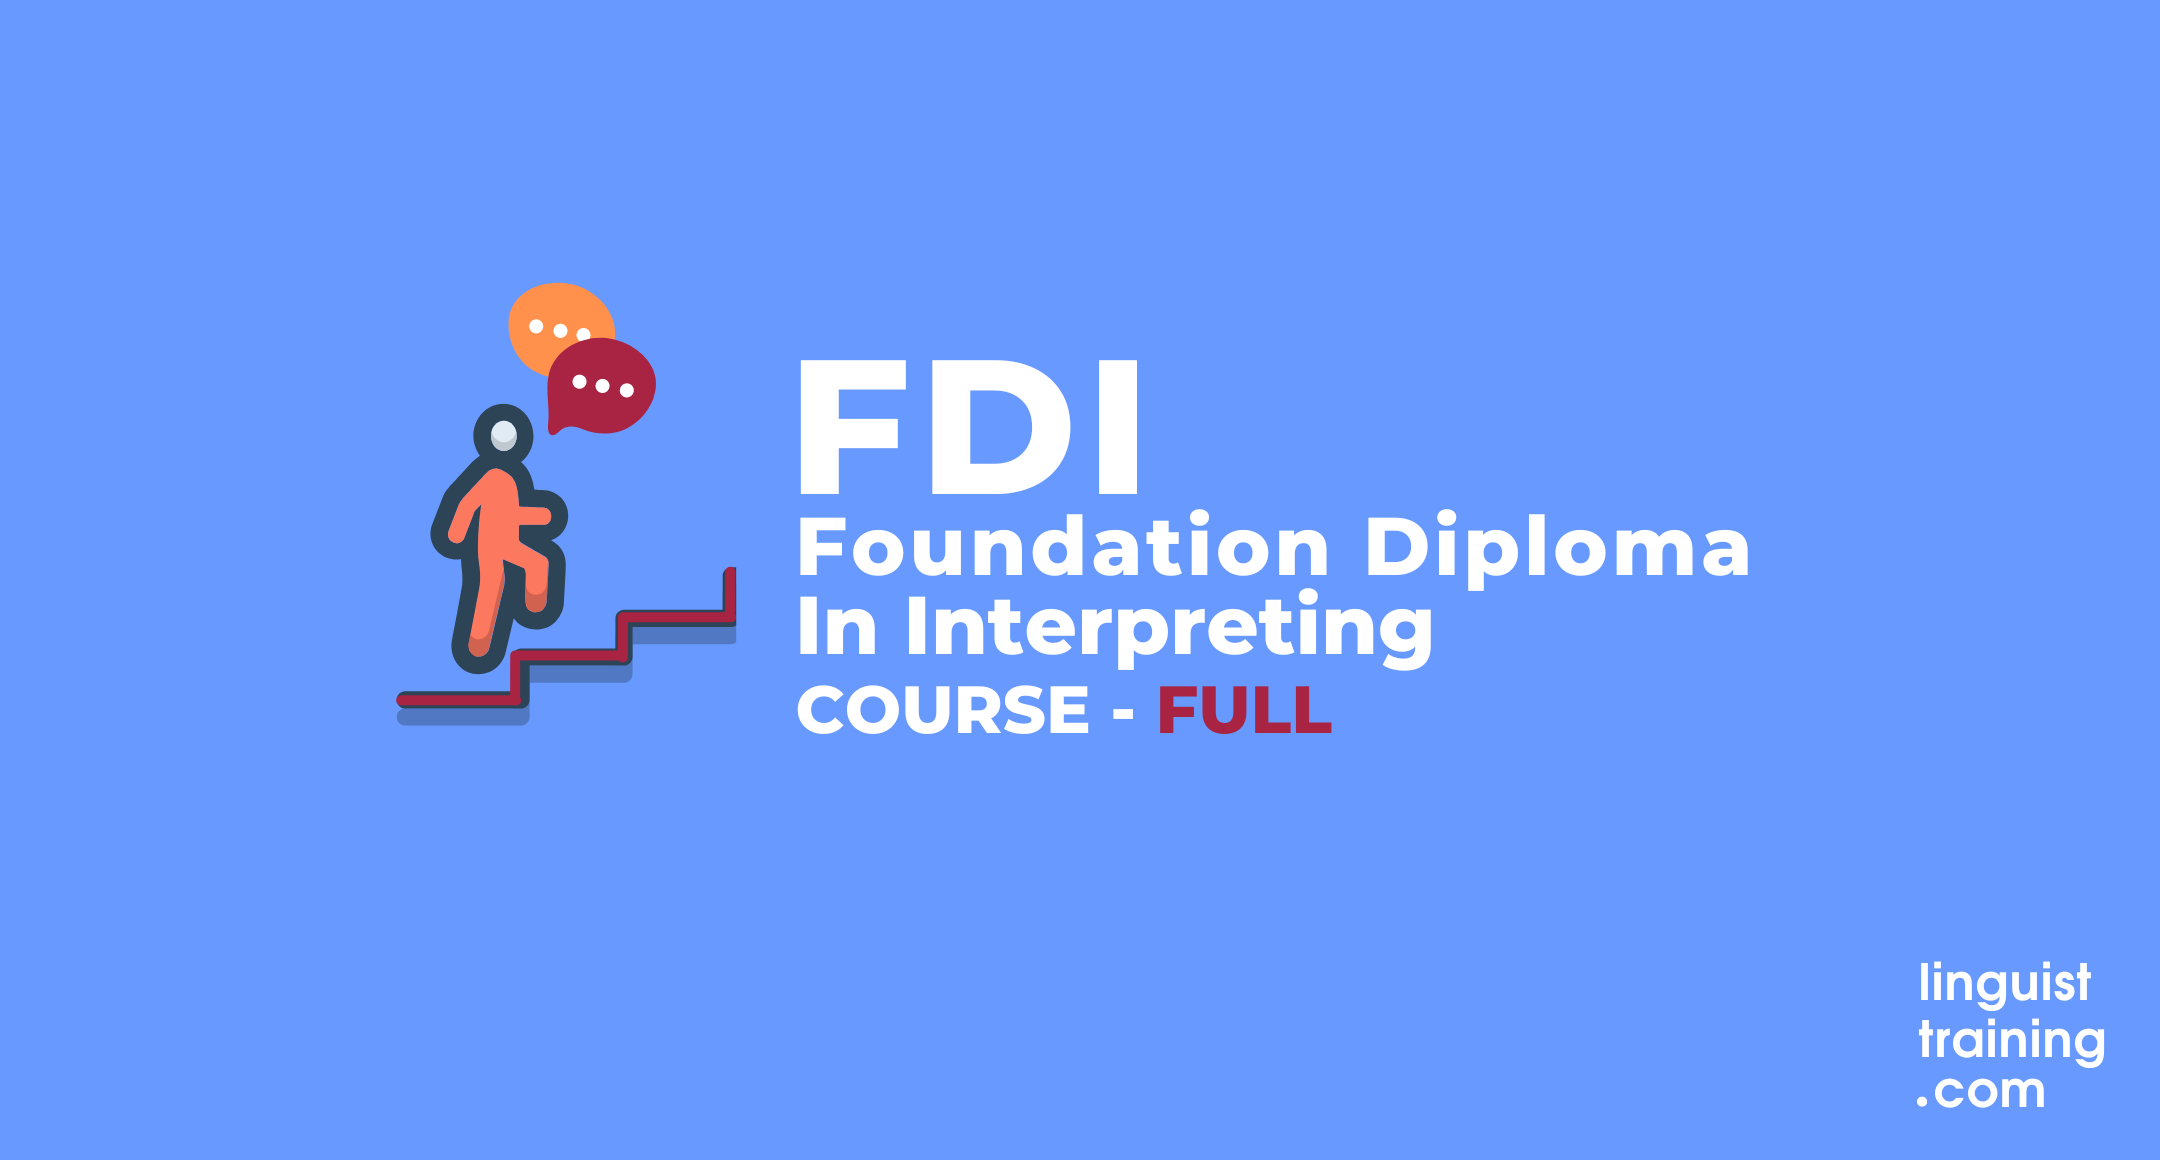 LingTrain-Course-FDI-Full.png